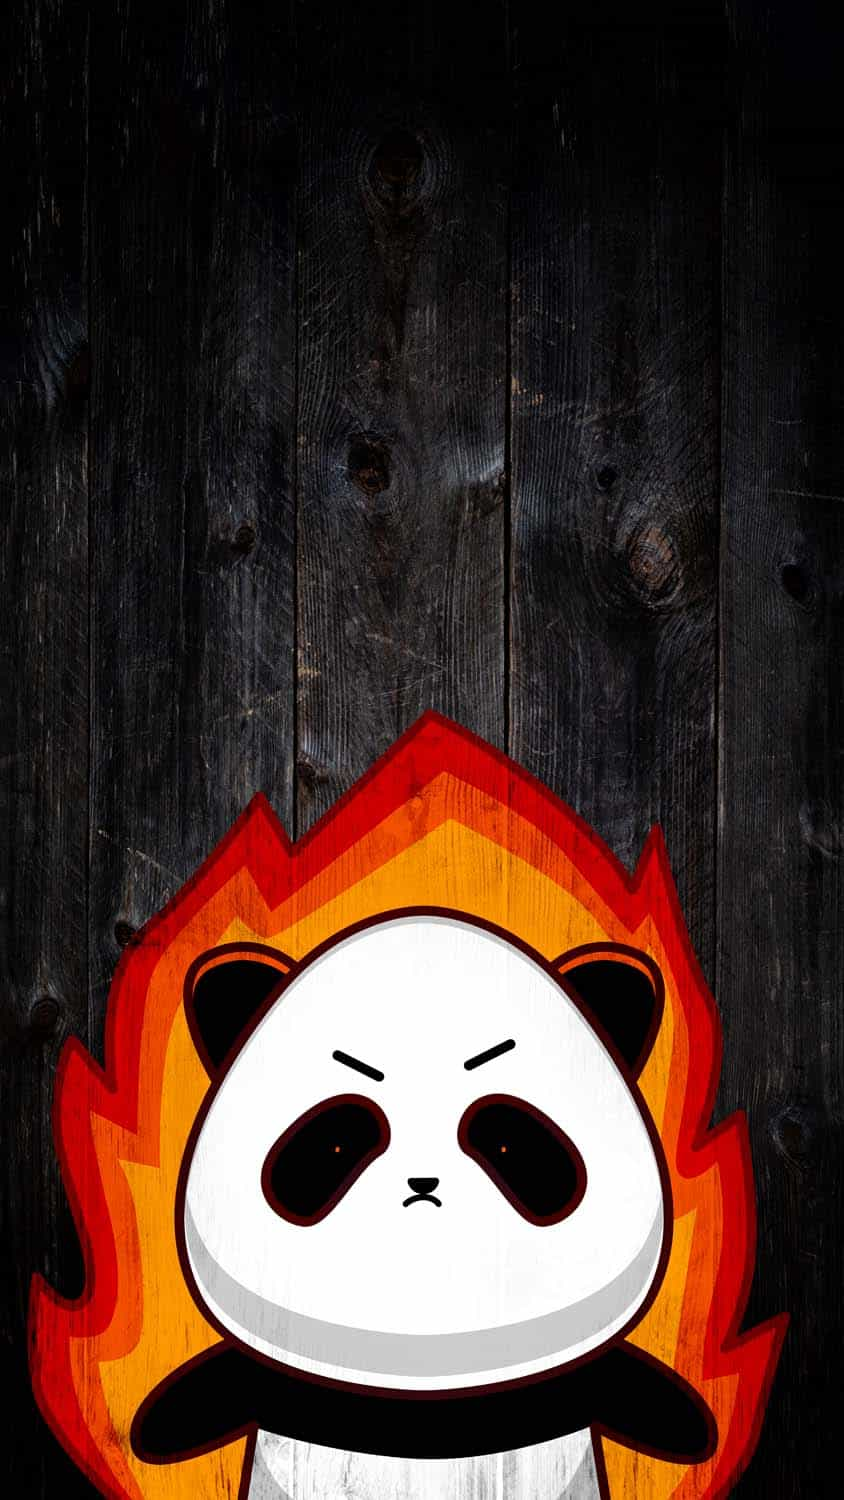 Superpower Panda IPhone Wallpaper HD  IPhone Wallpapers